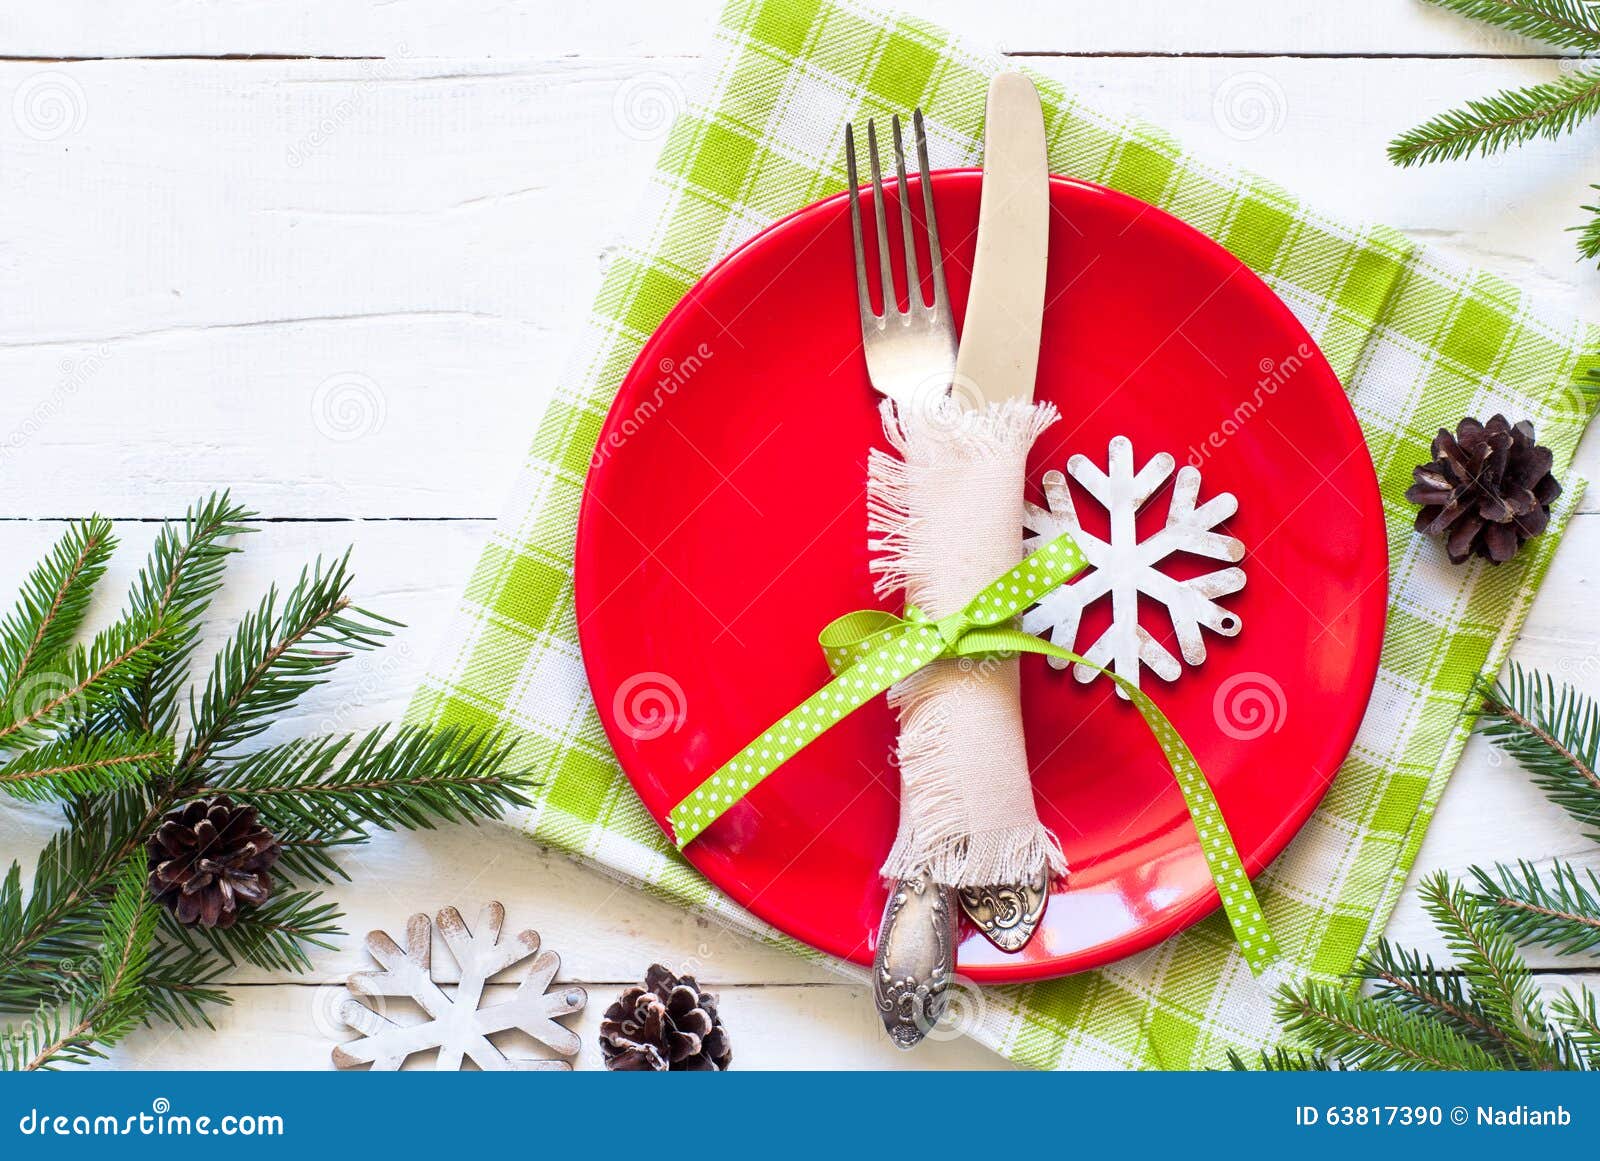 Christmas table setting stock photo. Image of background - 63817390